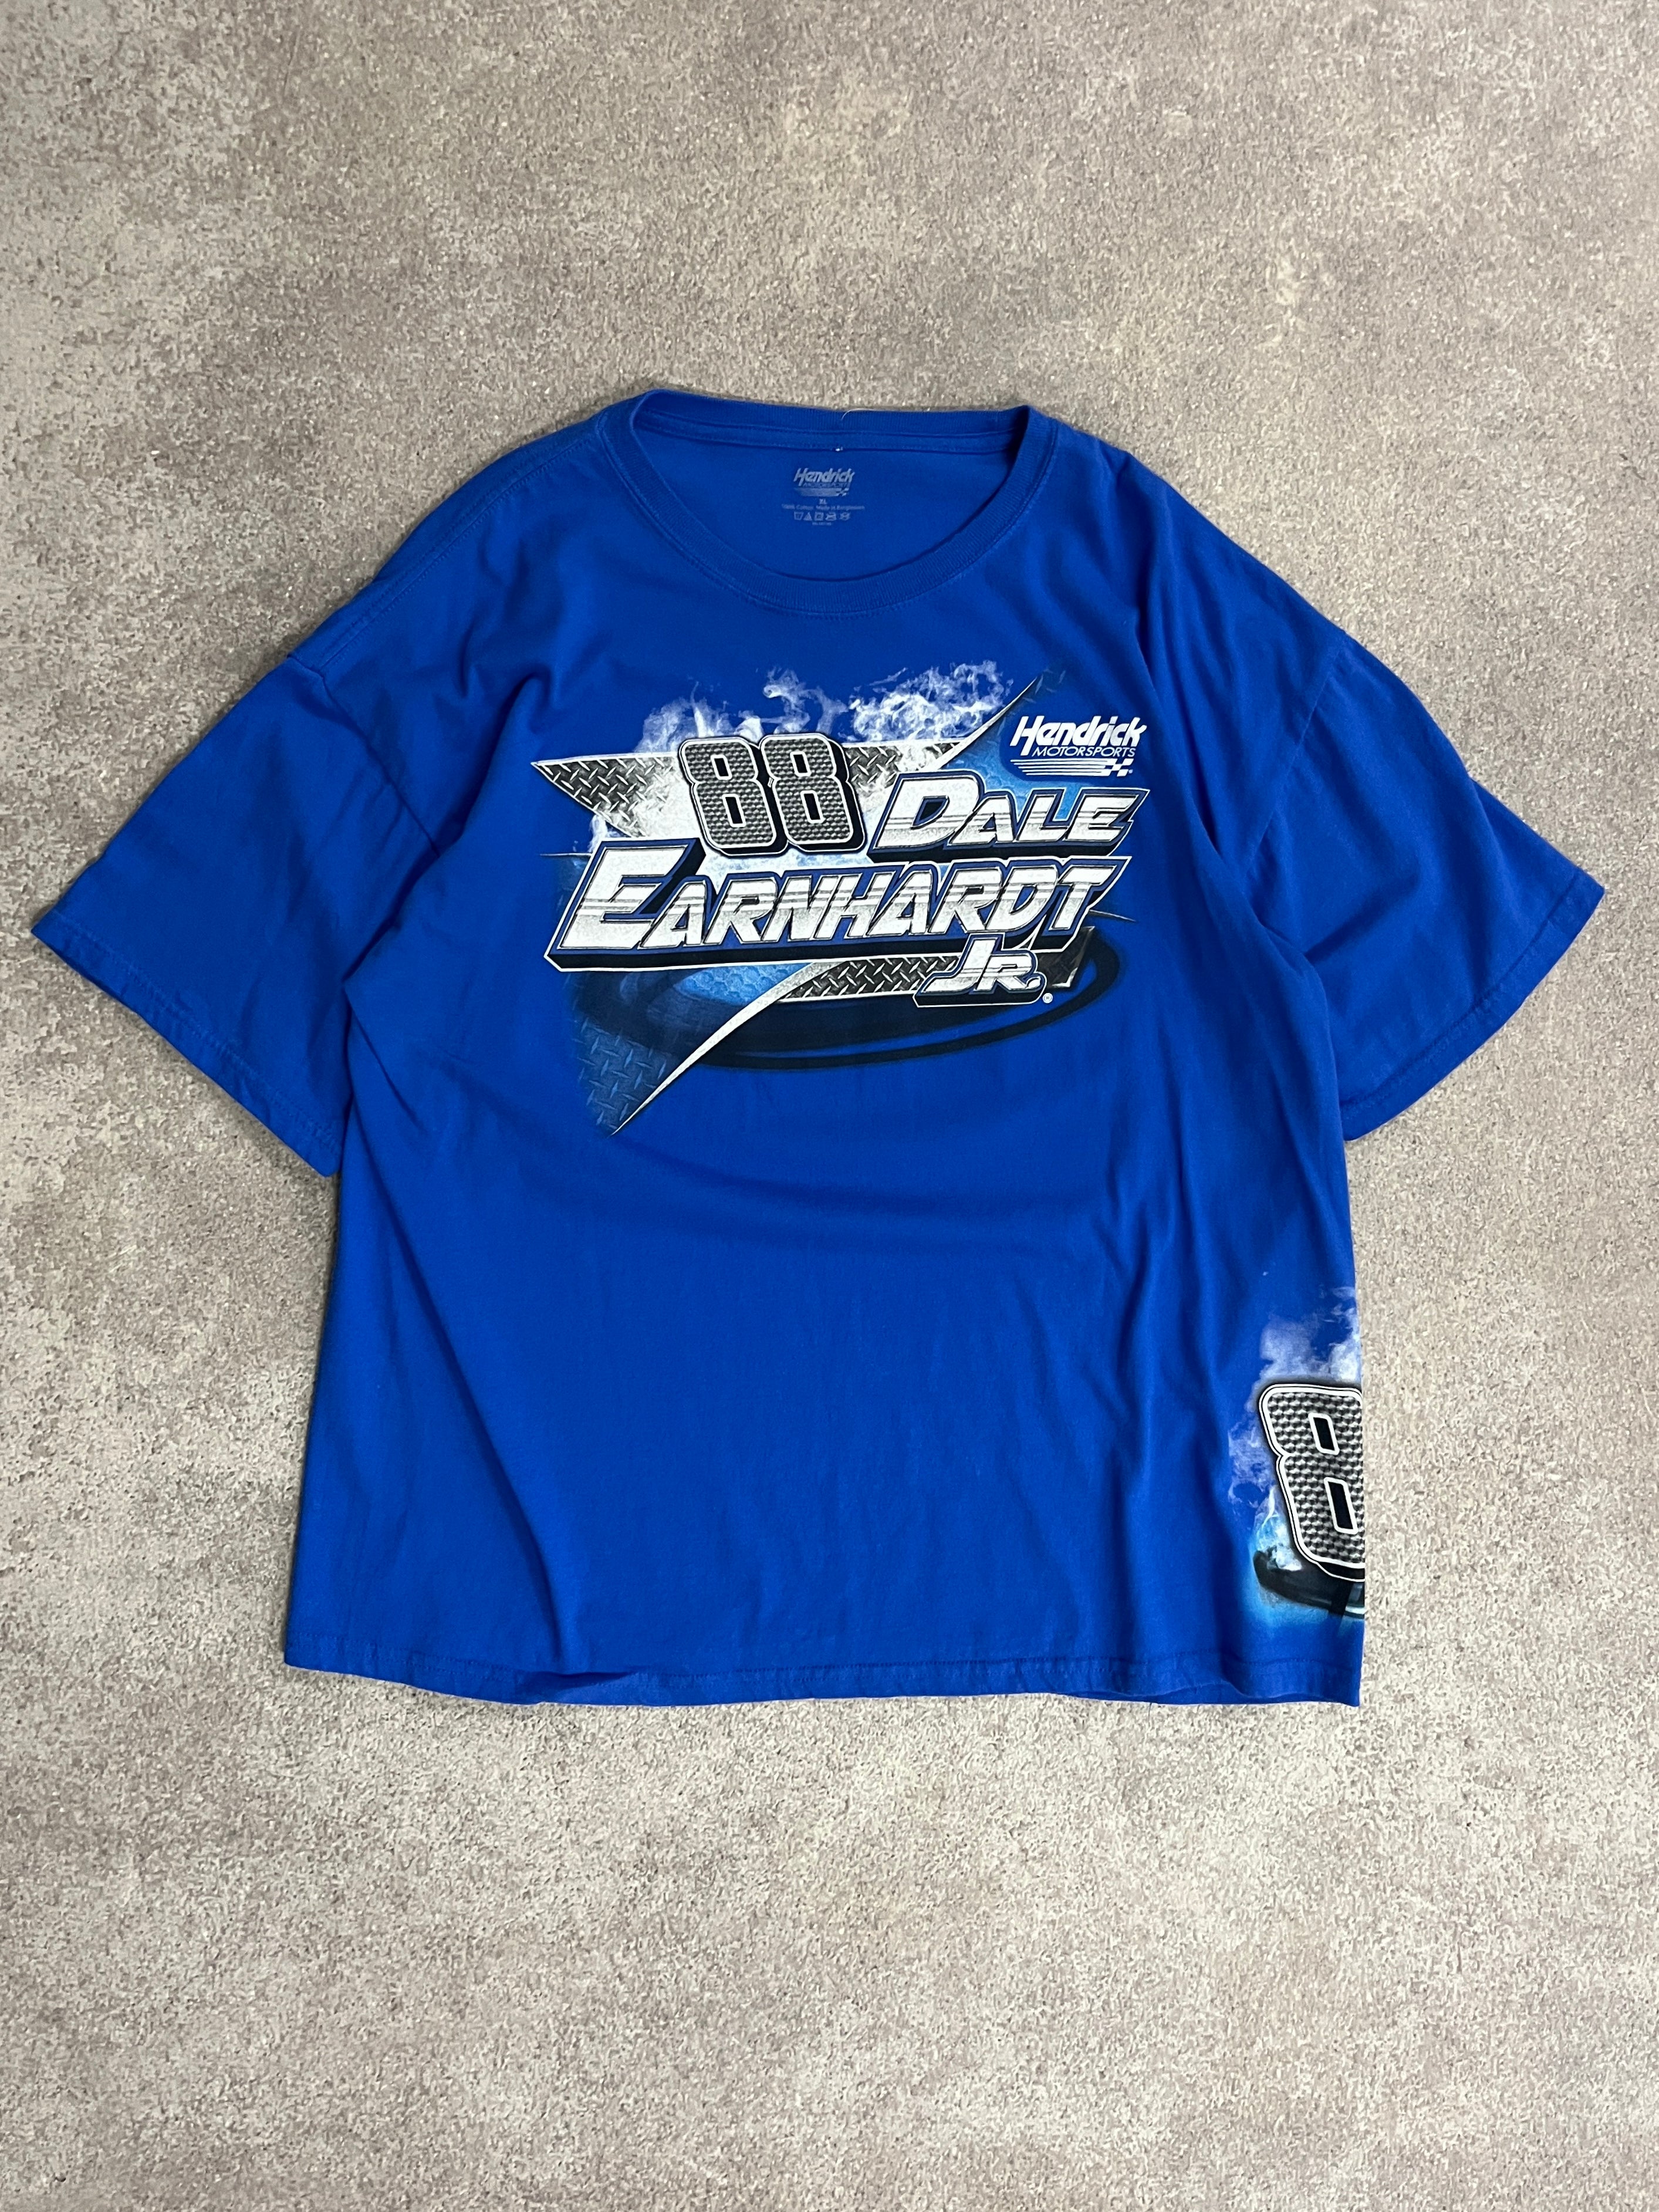 Vintage Dale Earnhardt Nascar Tshirt Blue // Medium - RHAGHOUSE VINTAGE